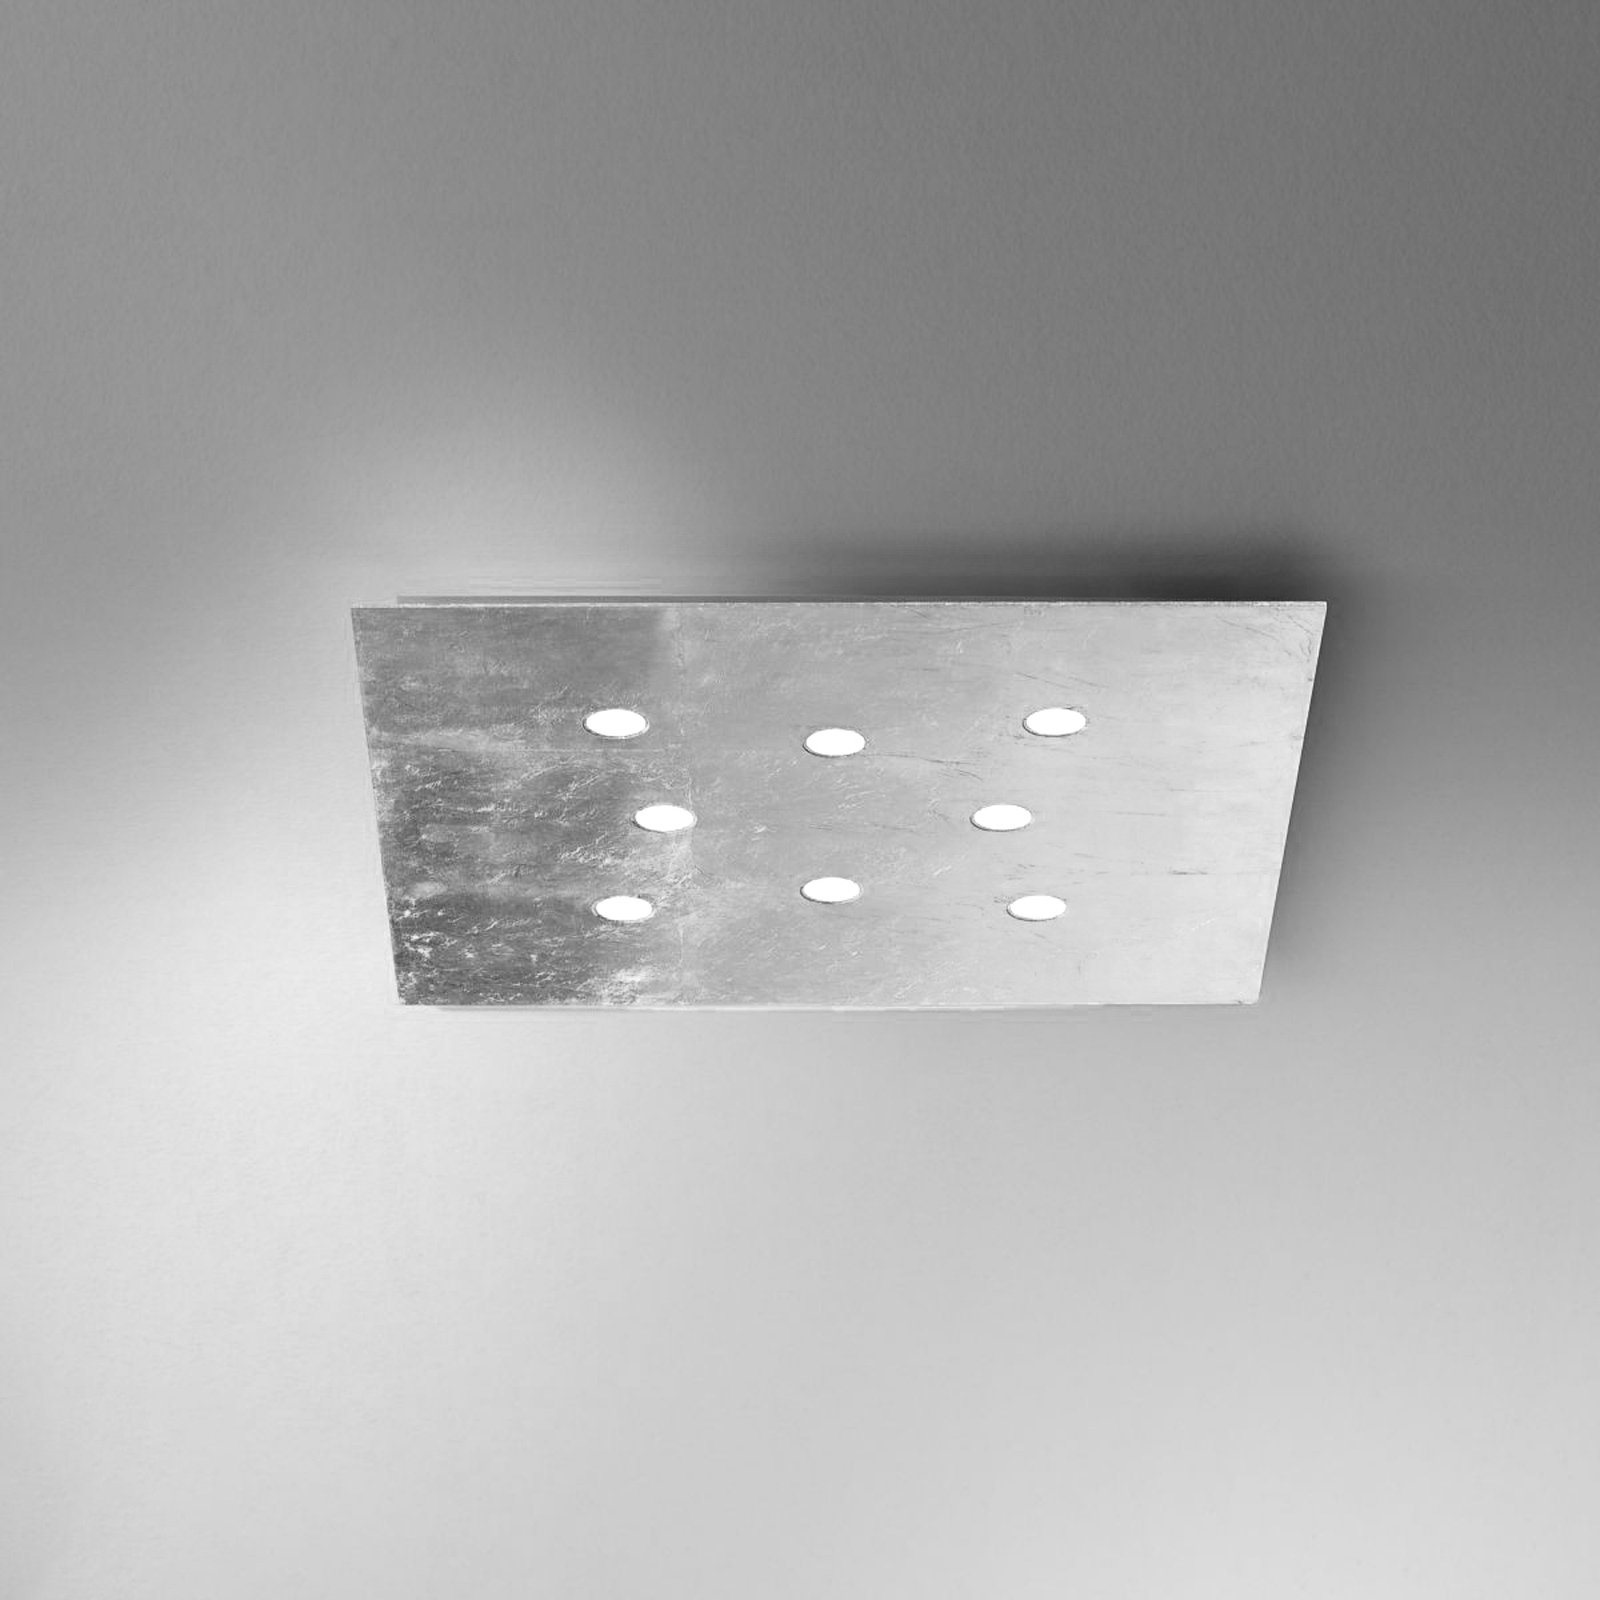 ICONE Slim - ploché LED stropné svietidlo 8 svetiel biele